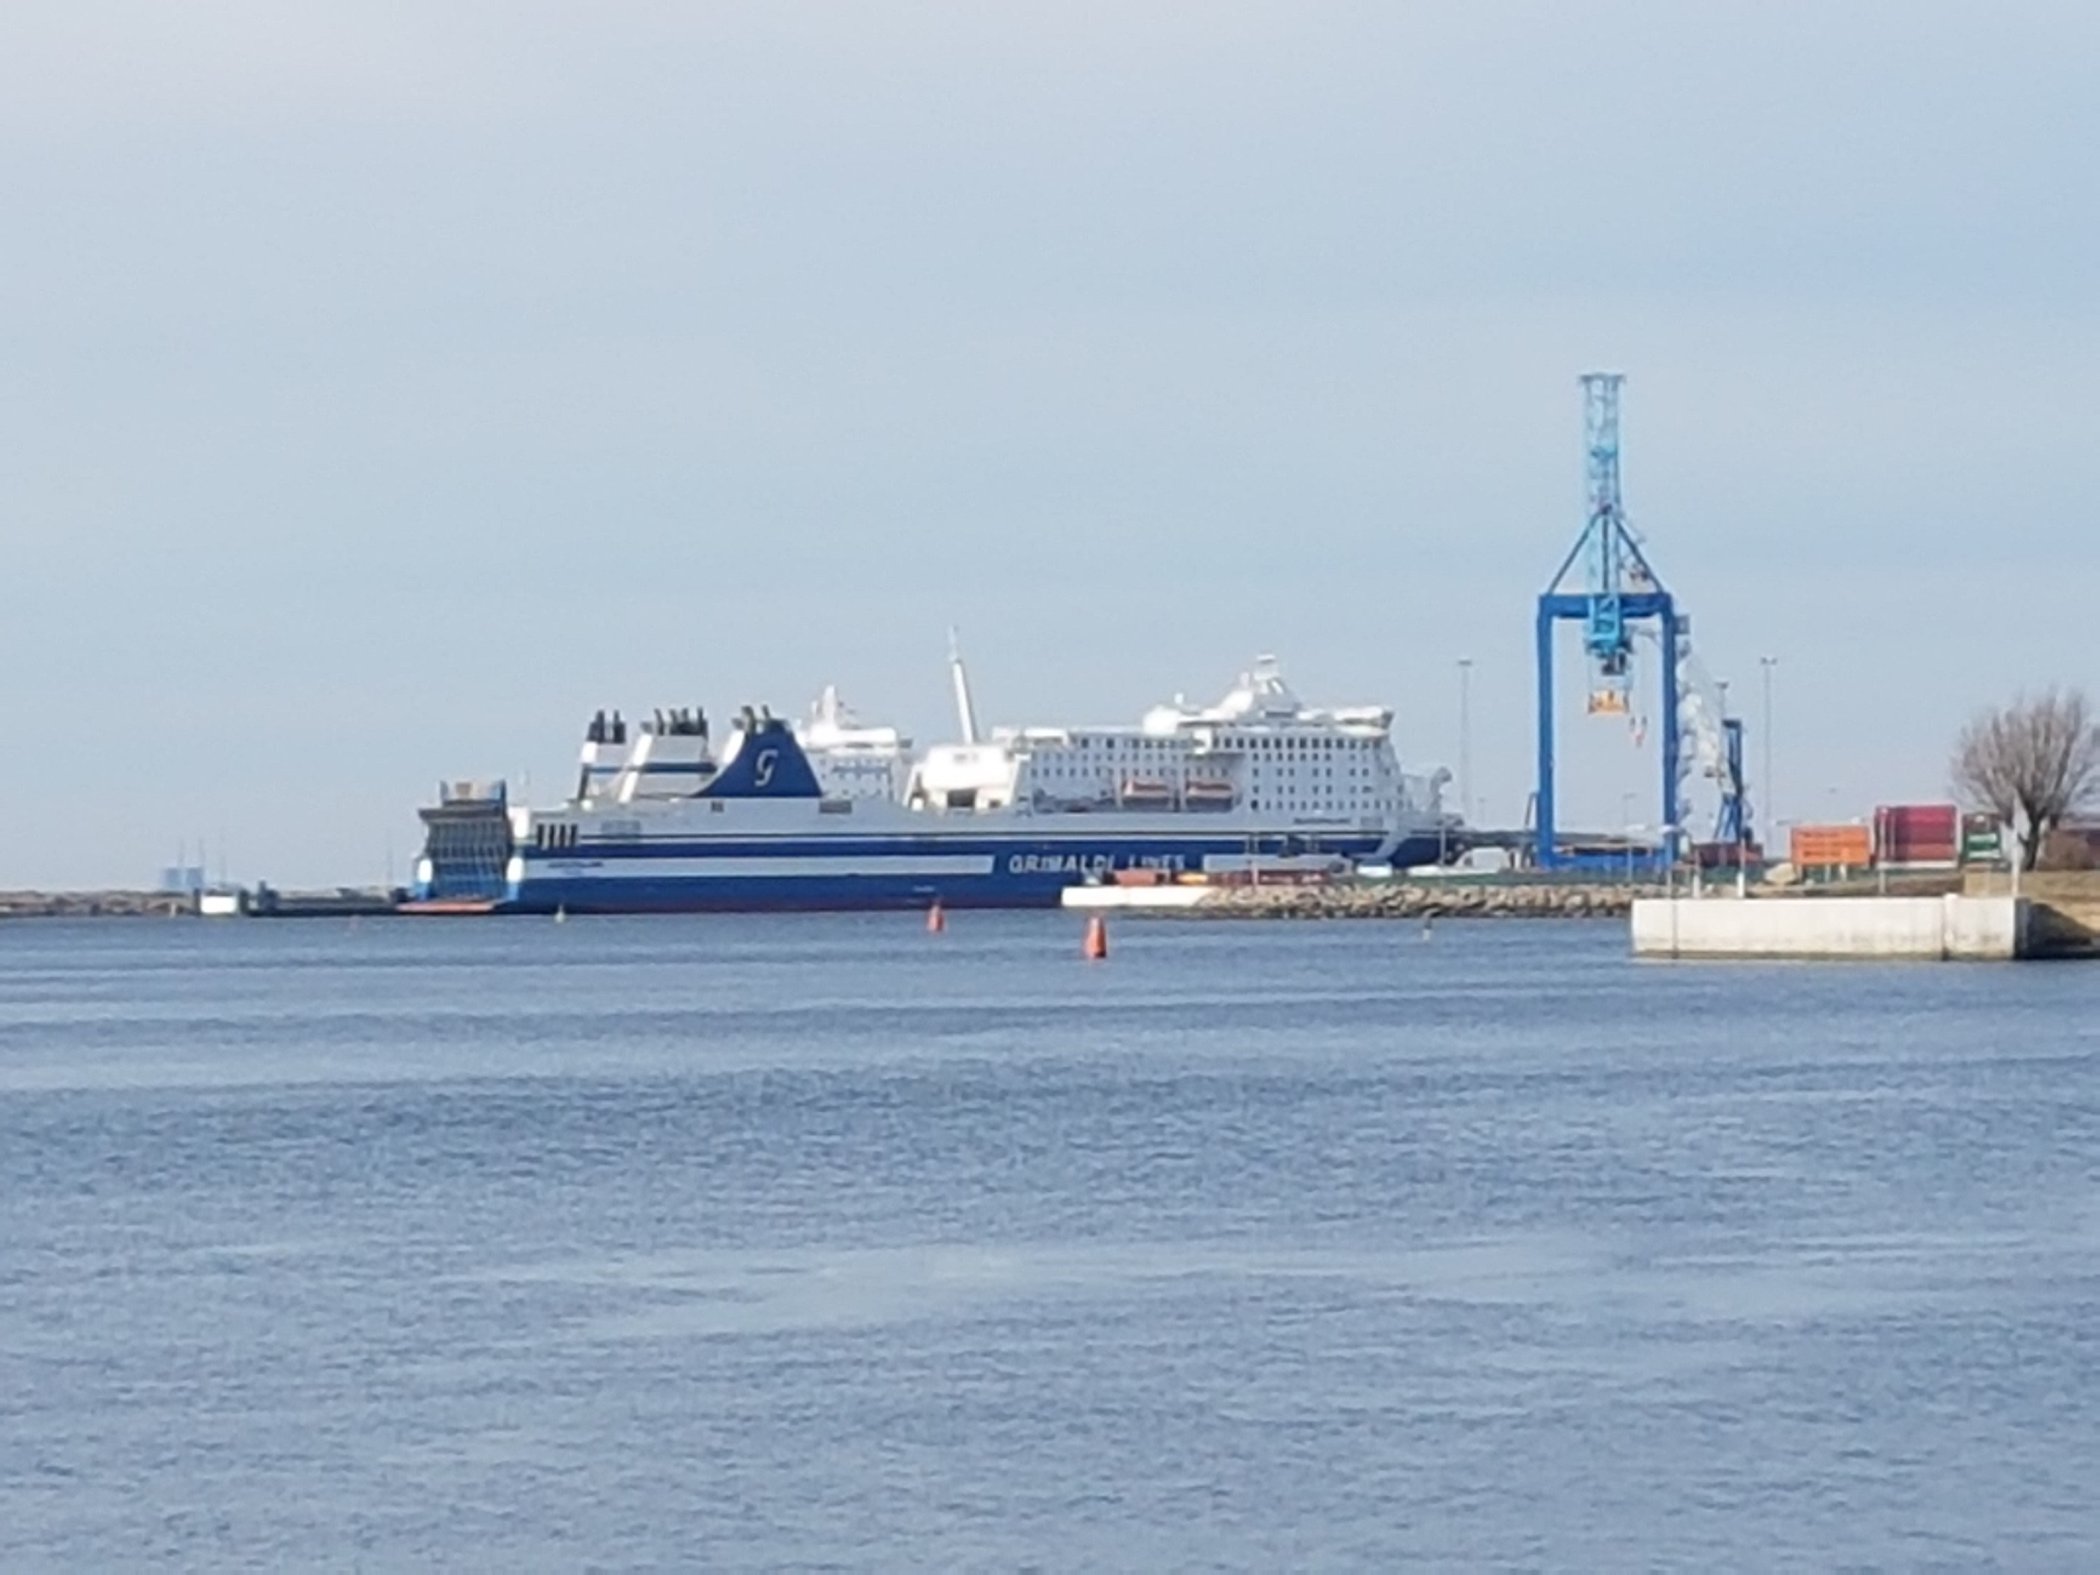 Europalink in Malmoe Port